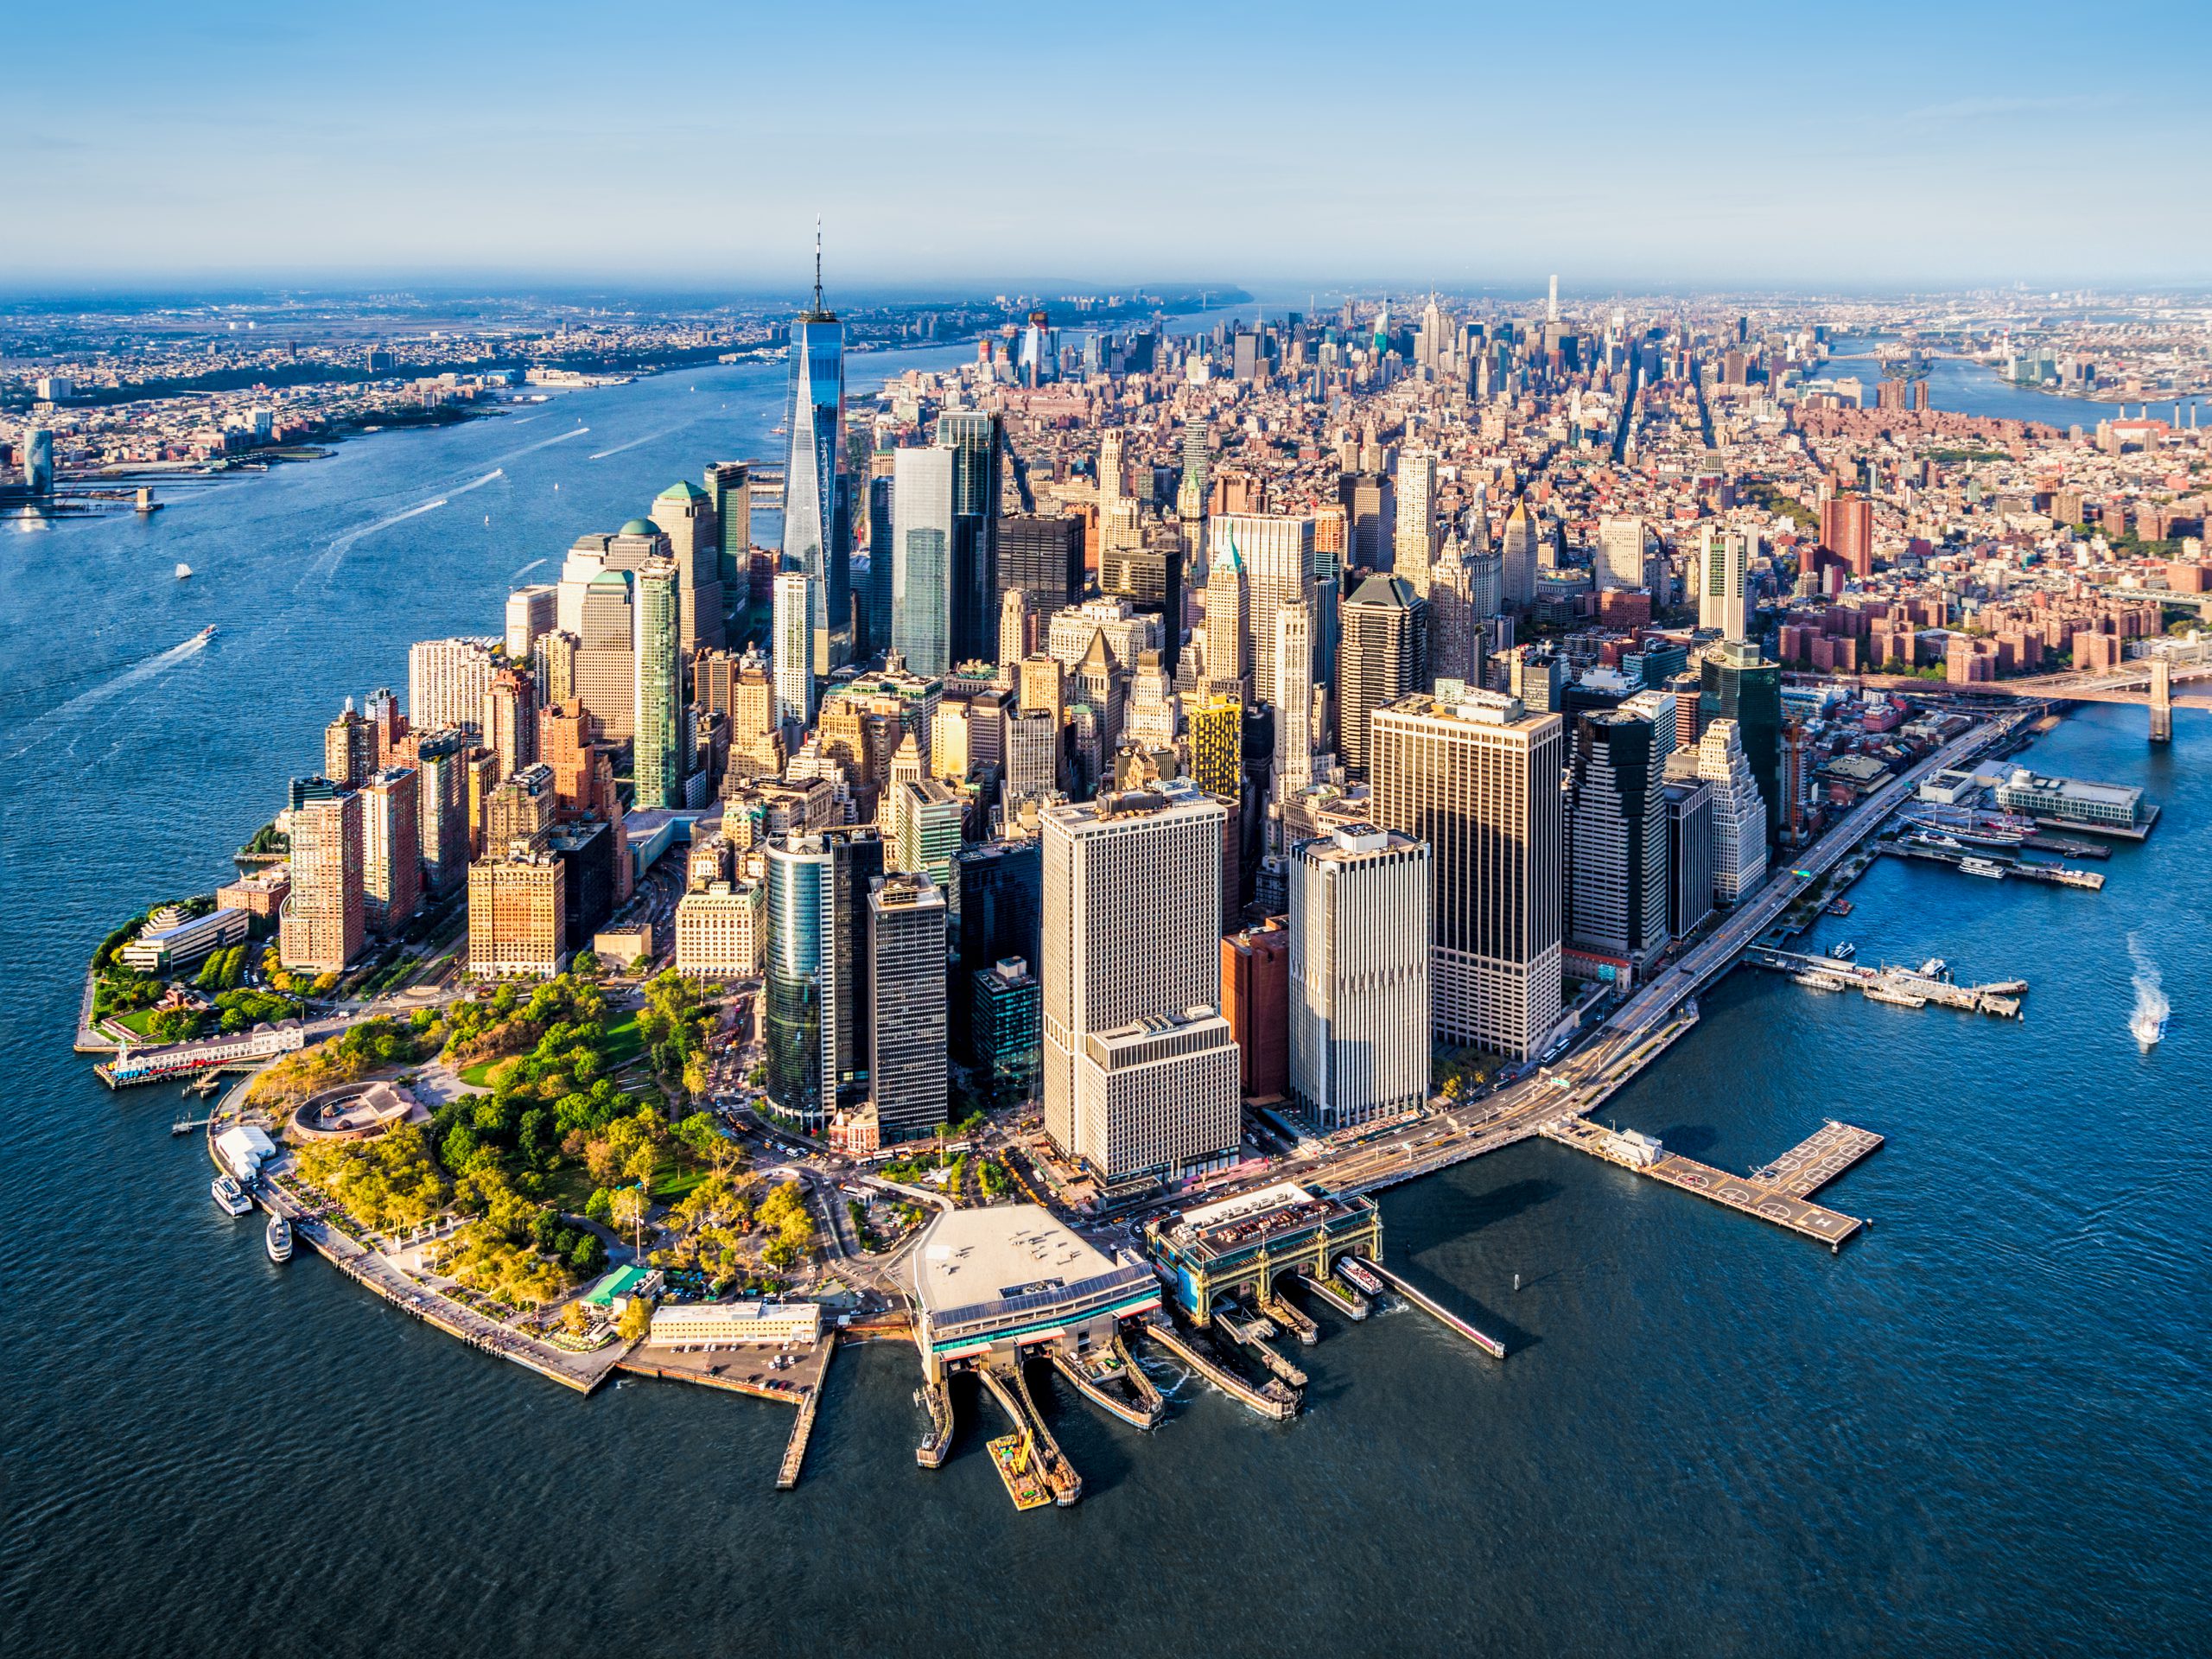 Aerial image of Lower Manhattan